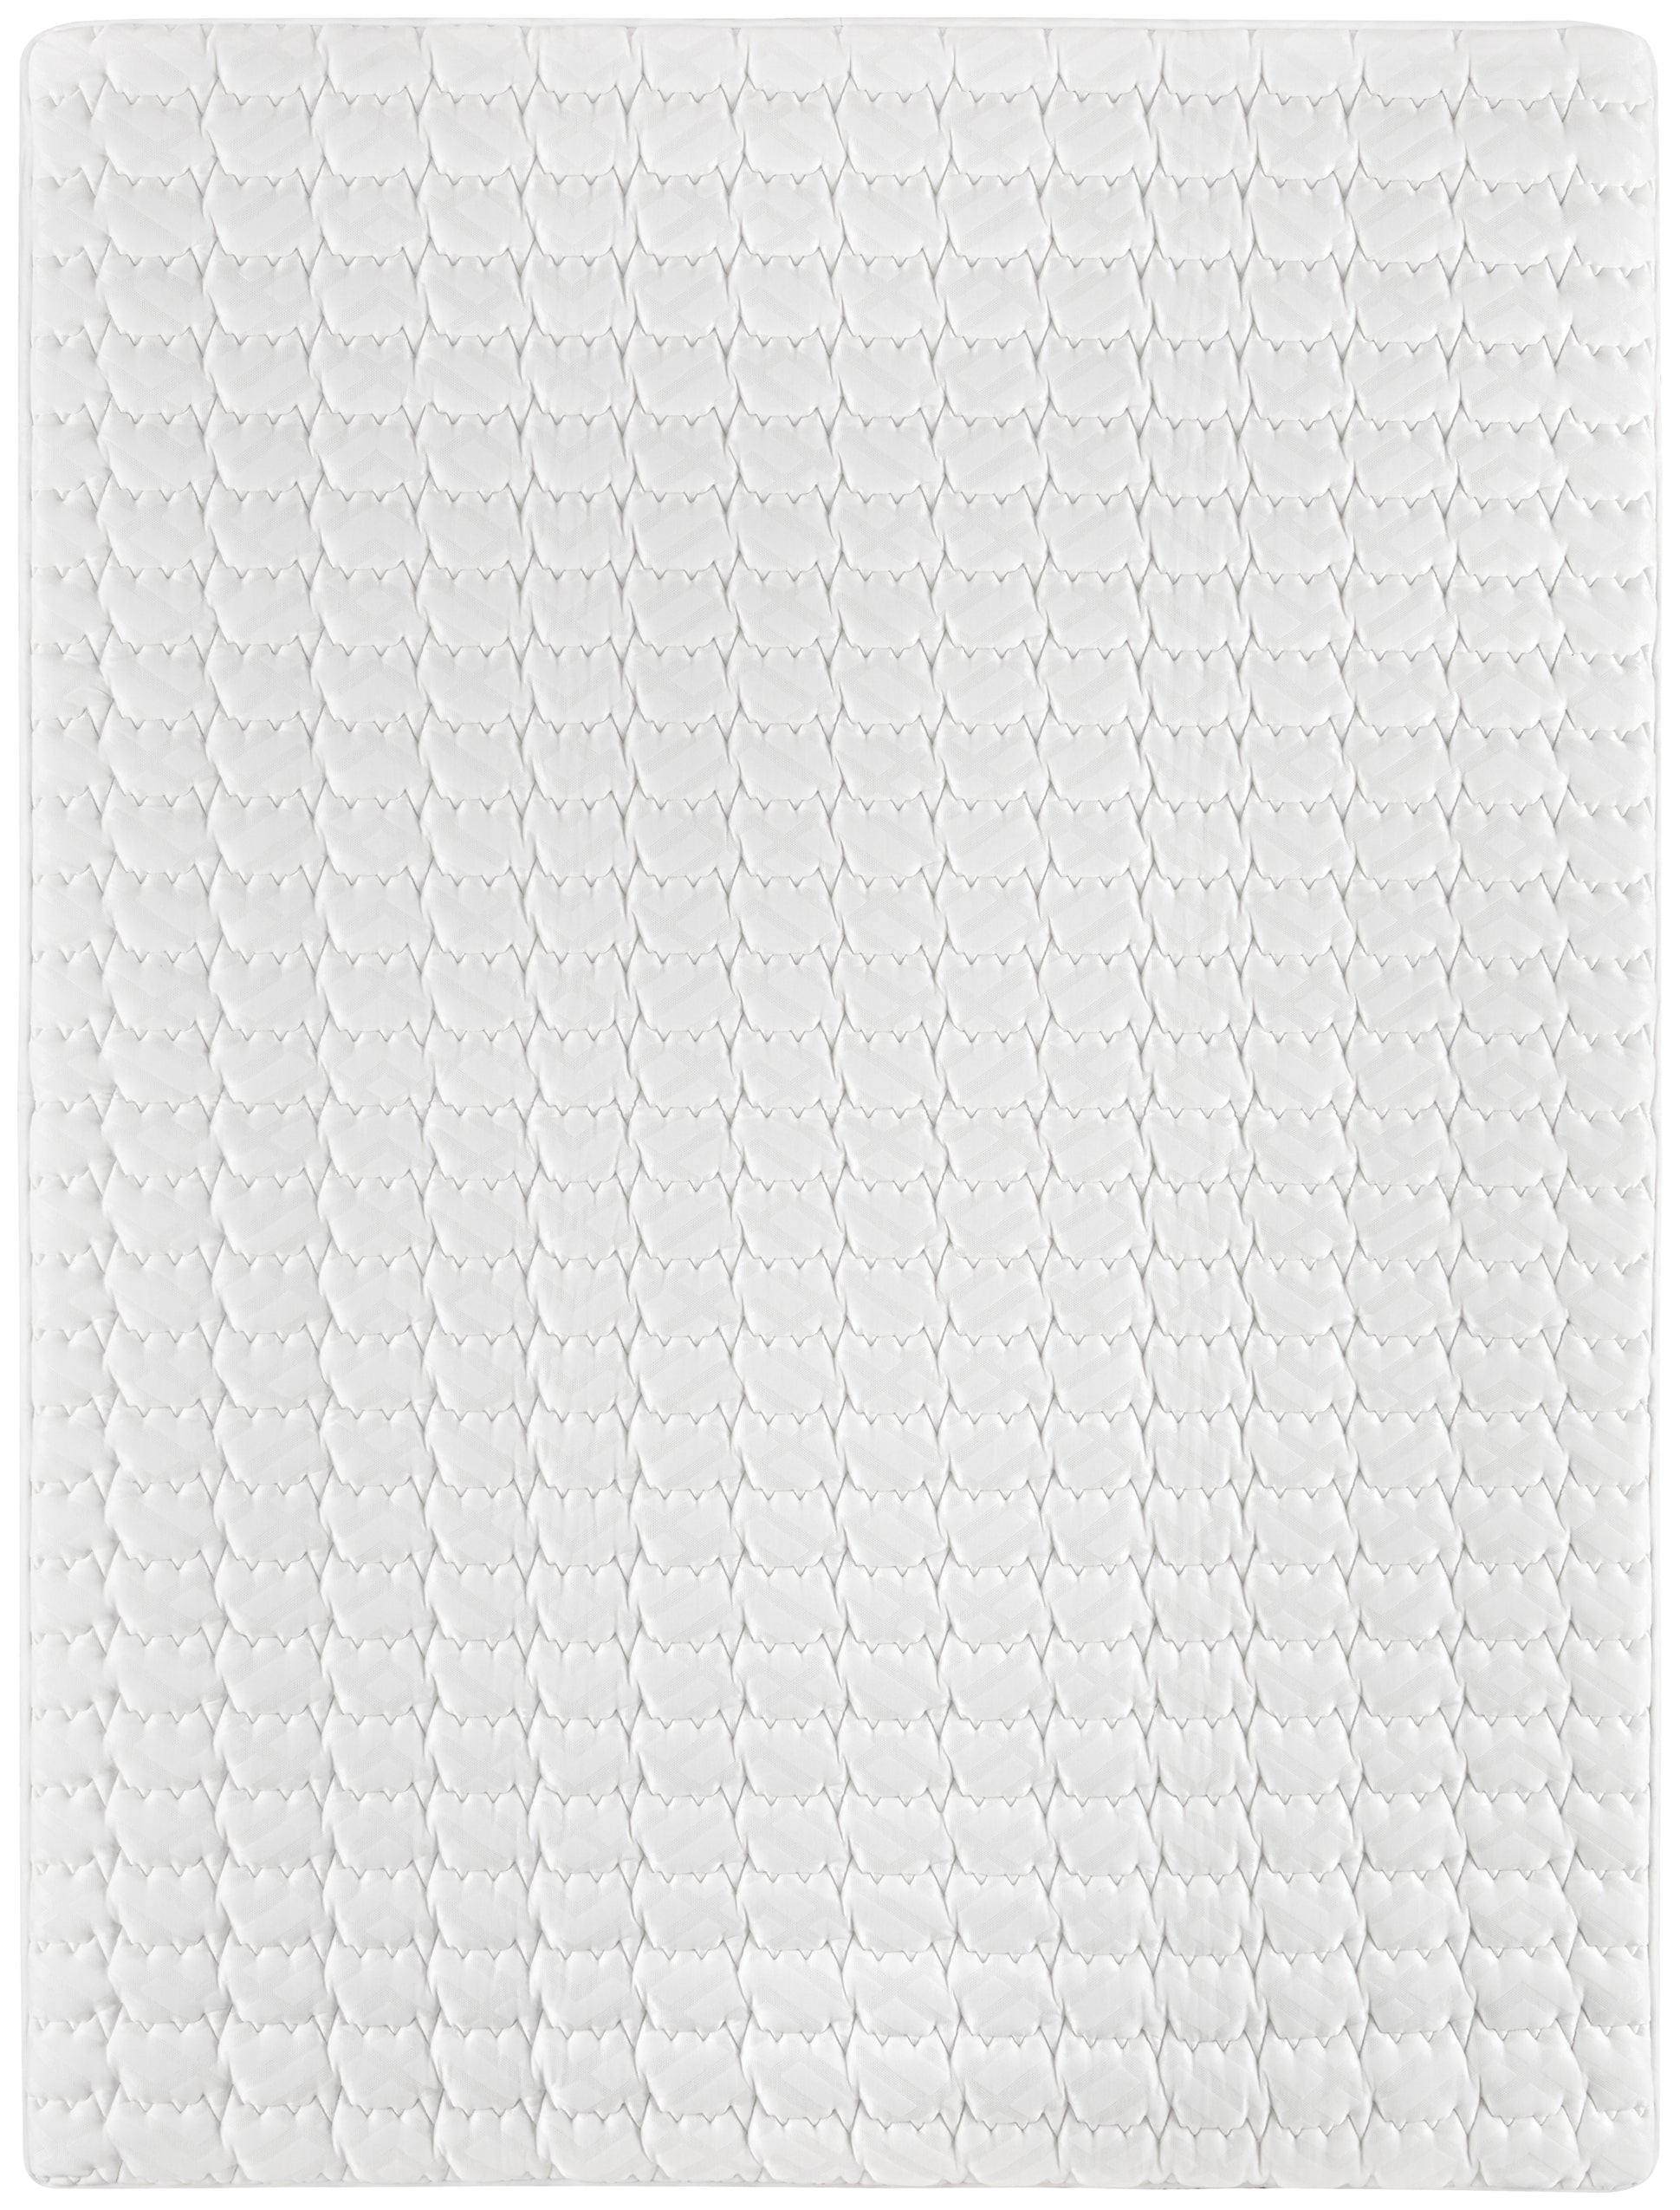 Hybrid - Medium close up mattress fabric top